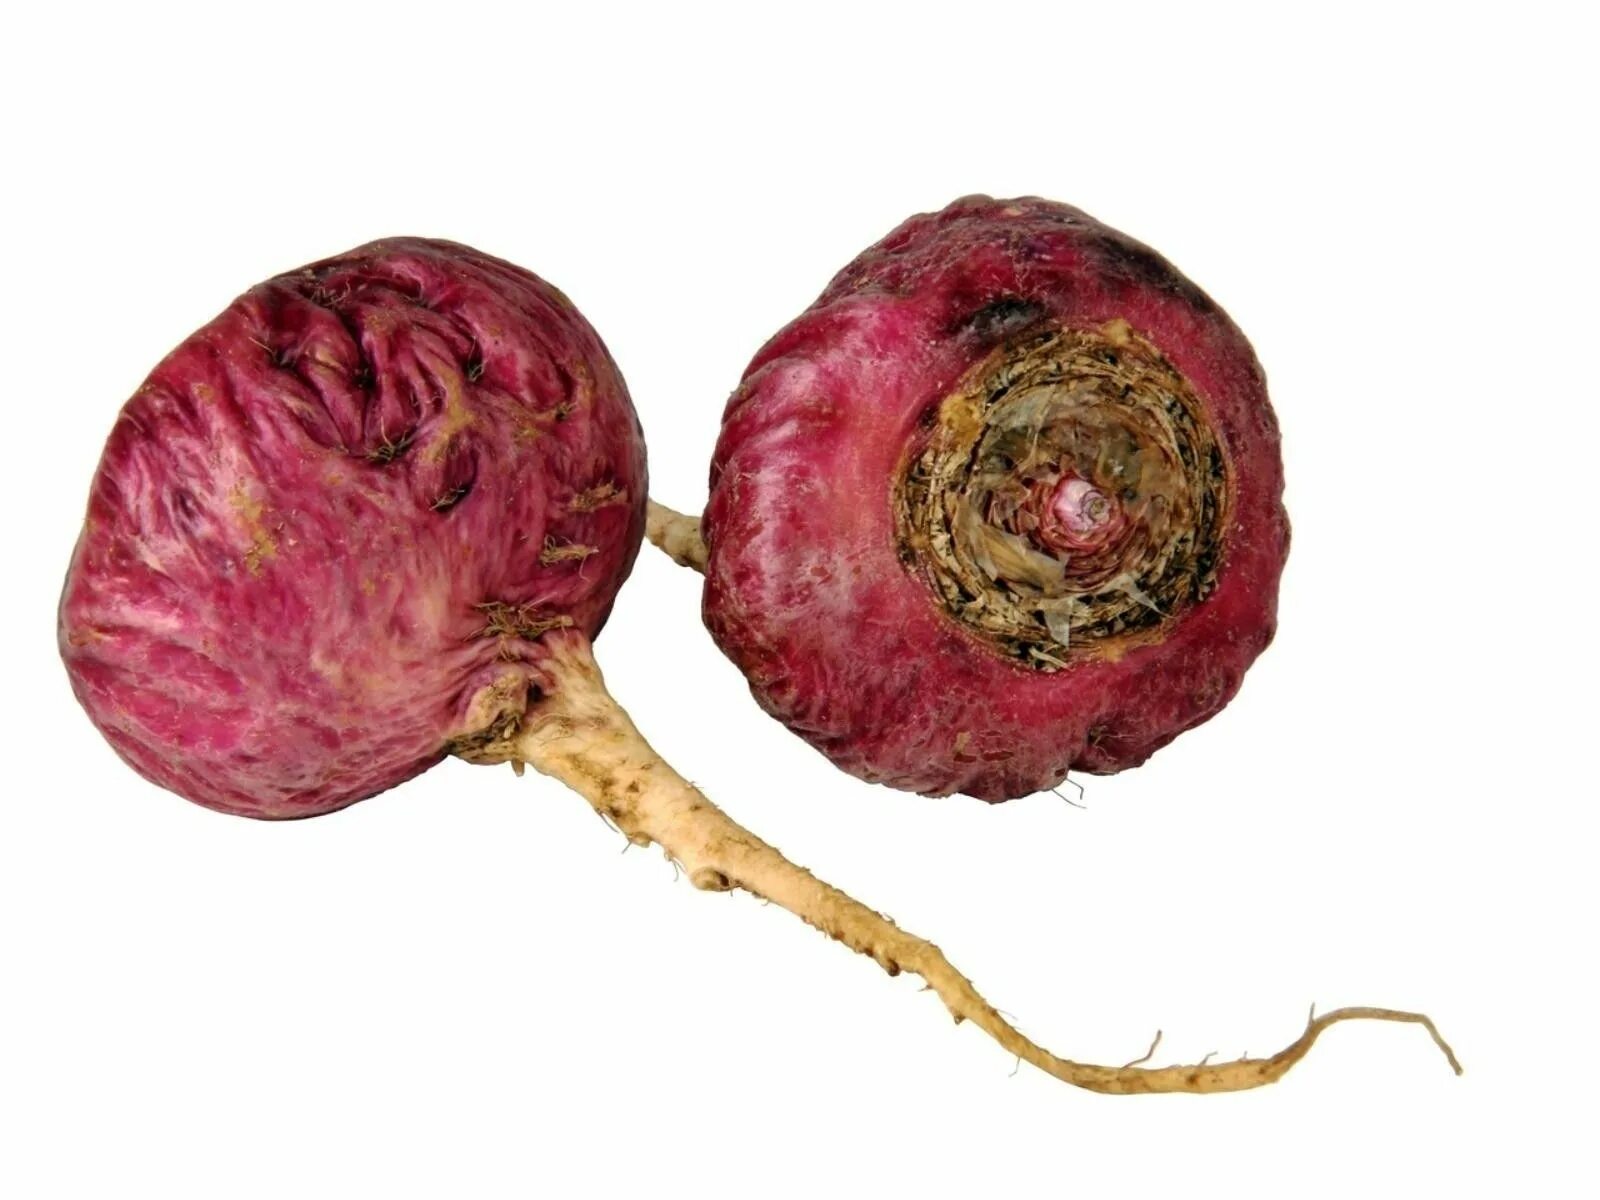 Корнеплод свеклы и клубень картофеля. Lepidium meyenii. Перуанский корнеплод мака. Мака красная Перуанская. Перуанский корень maca.